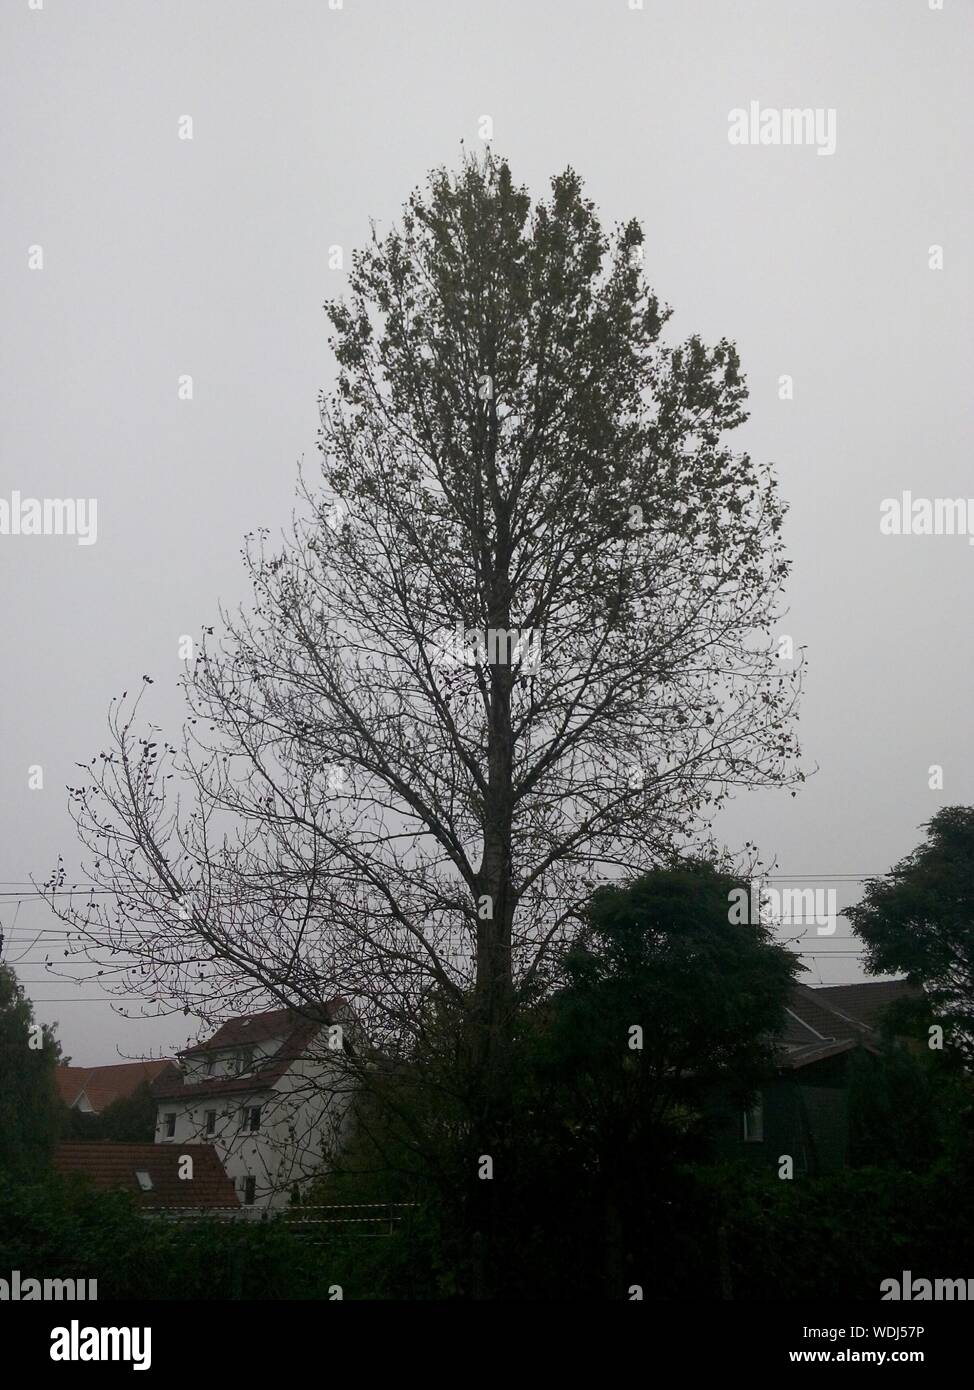 Tree In Overcast Day Stock Photo